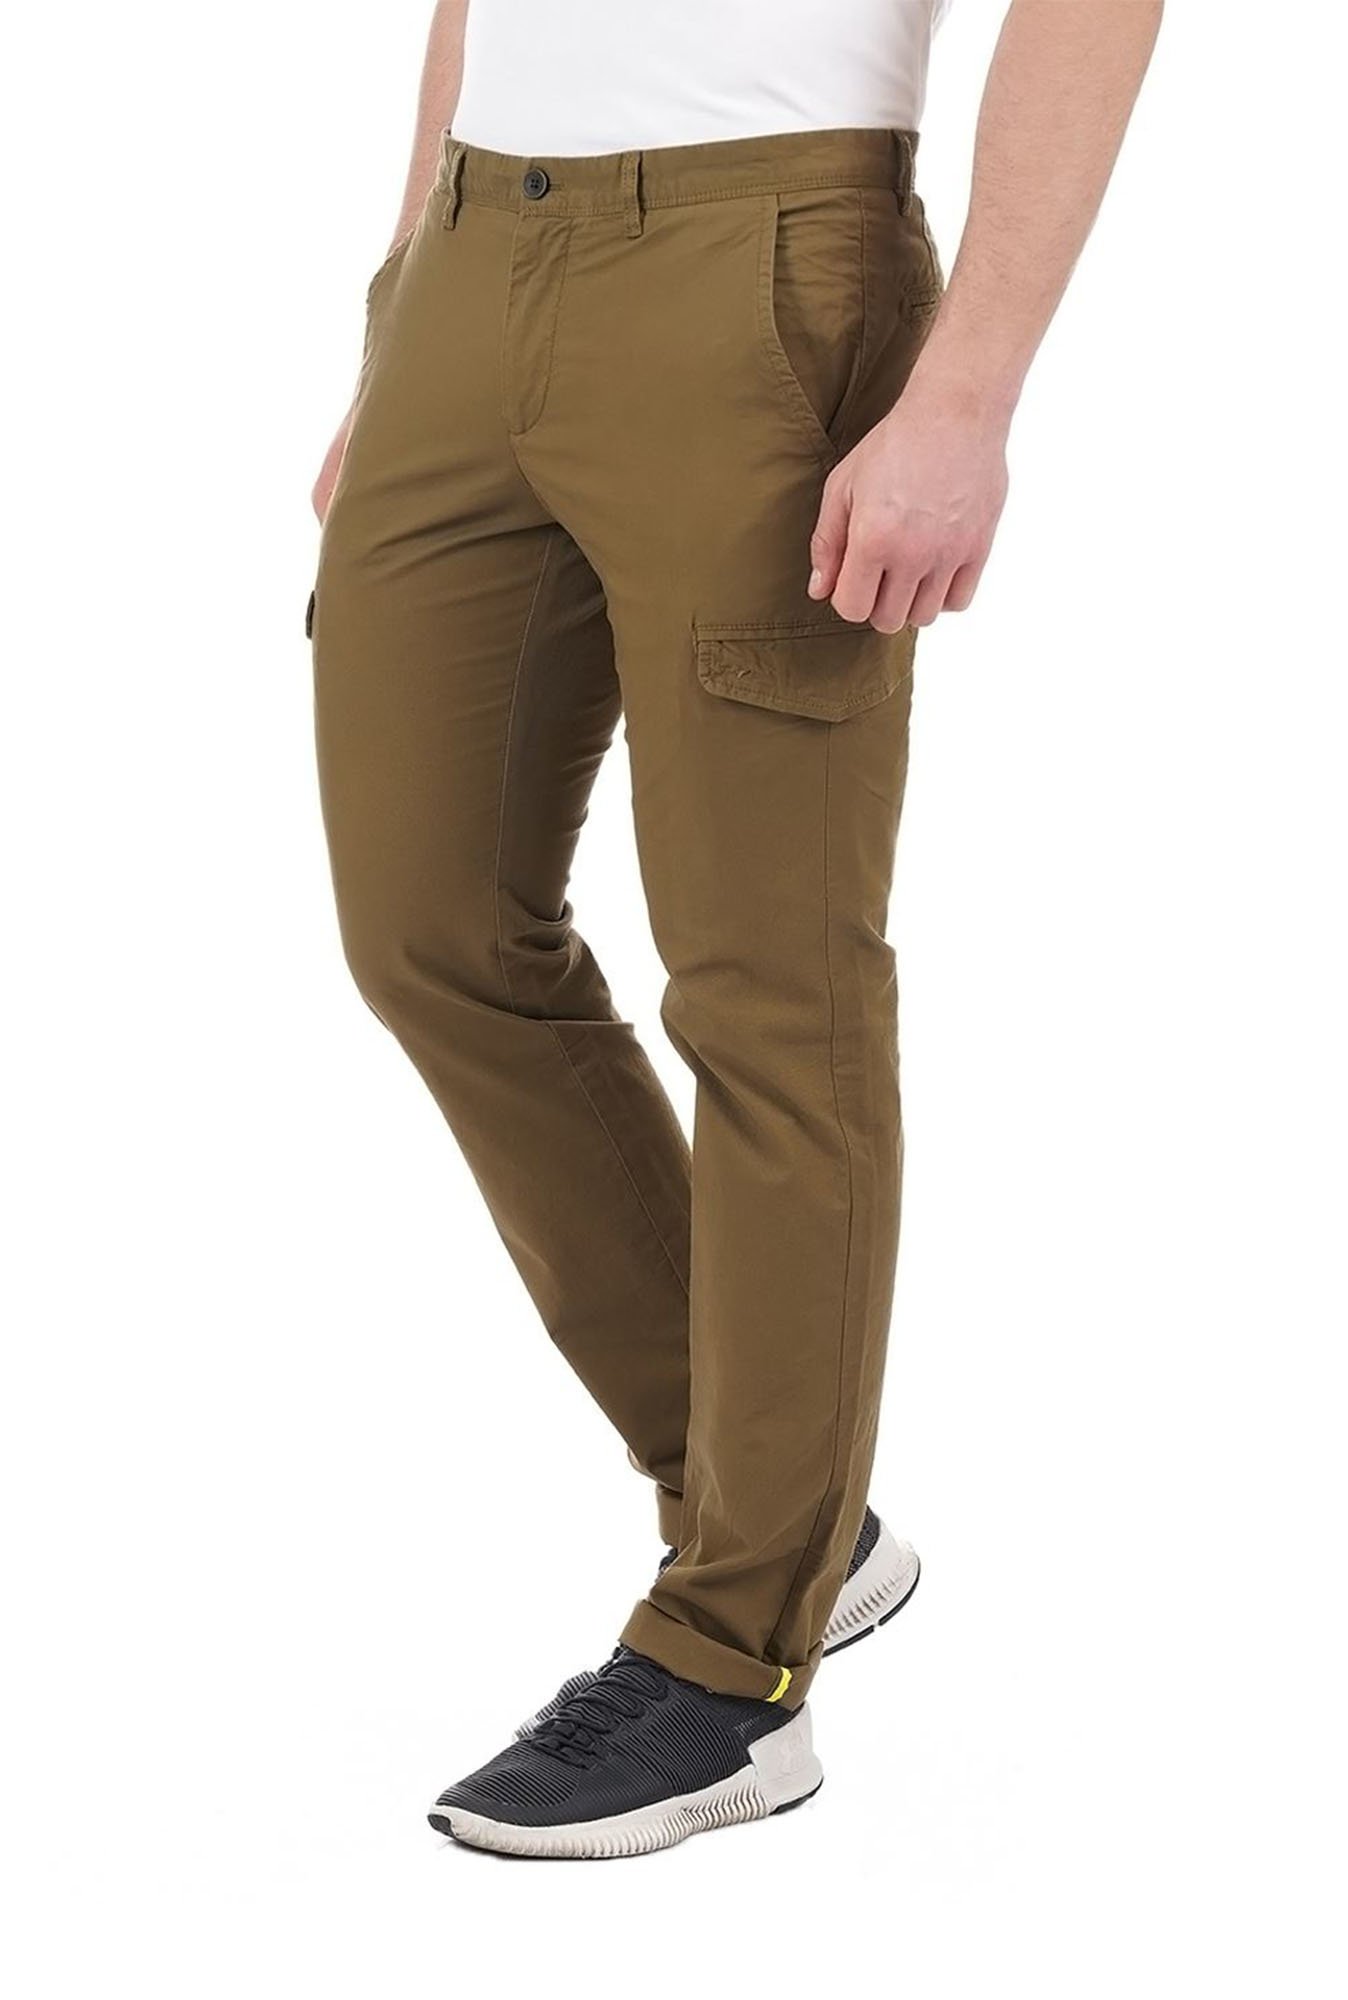 Fashion (8DarkArmyGreen)FALIZA Men's Cargo Pants Multi Pockets Style Pants  Cotton Men's Outwear Straight Casual Trousers For Men CK102 ACU @ Best  Price Online | Jumia Egypt